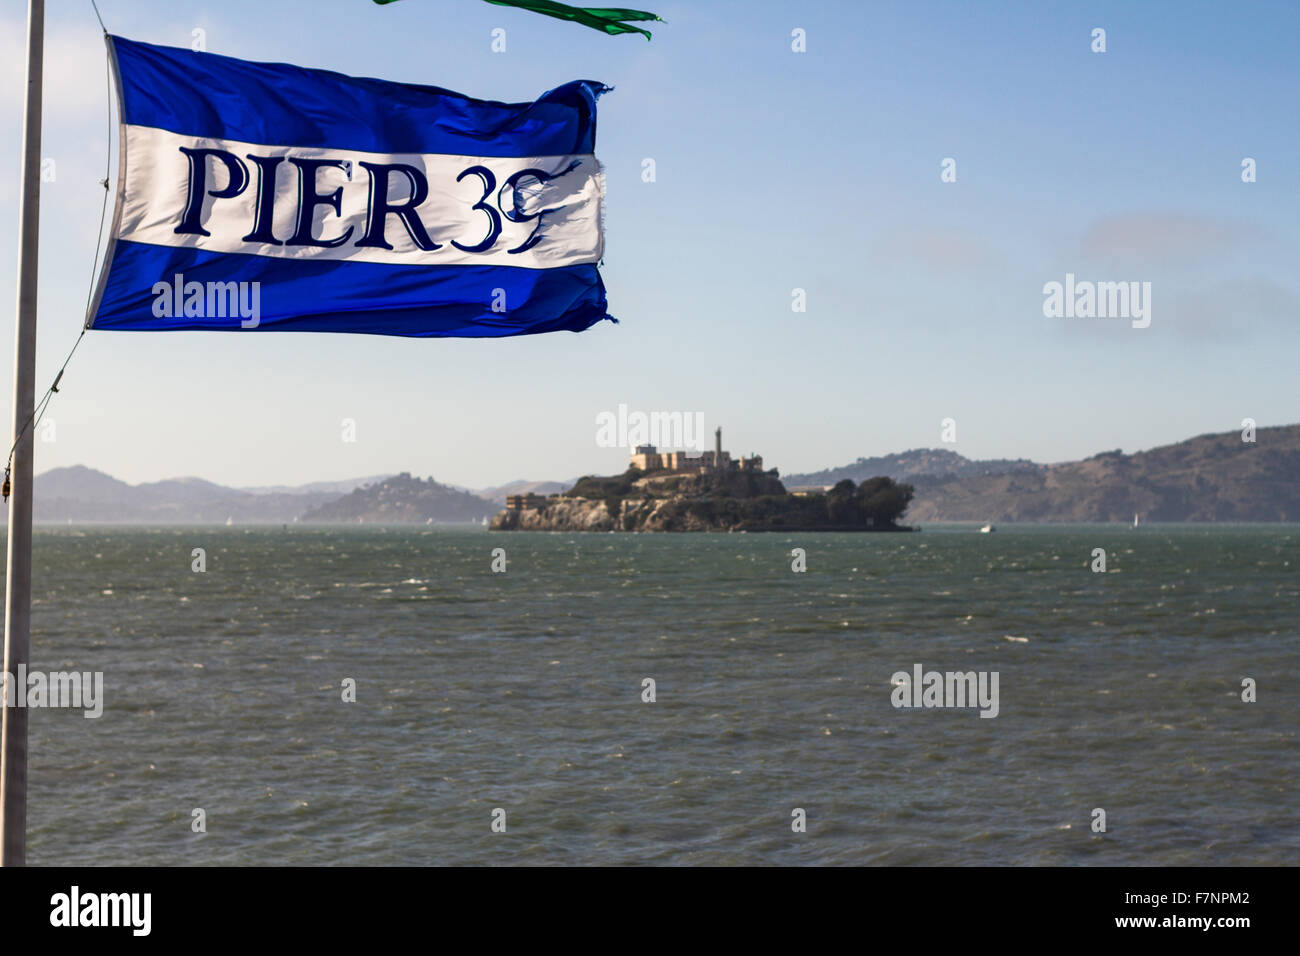 Pier 39 flag with view on Alcatraz Island, San Francisco Stock Photo